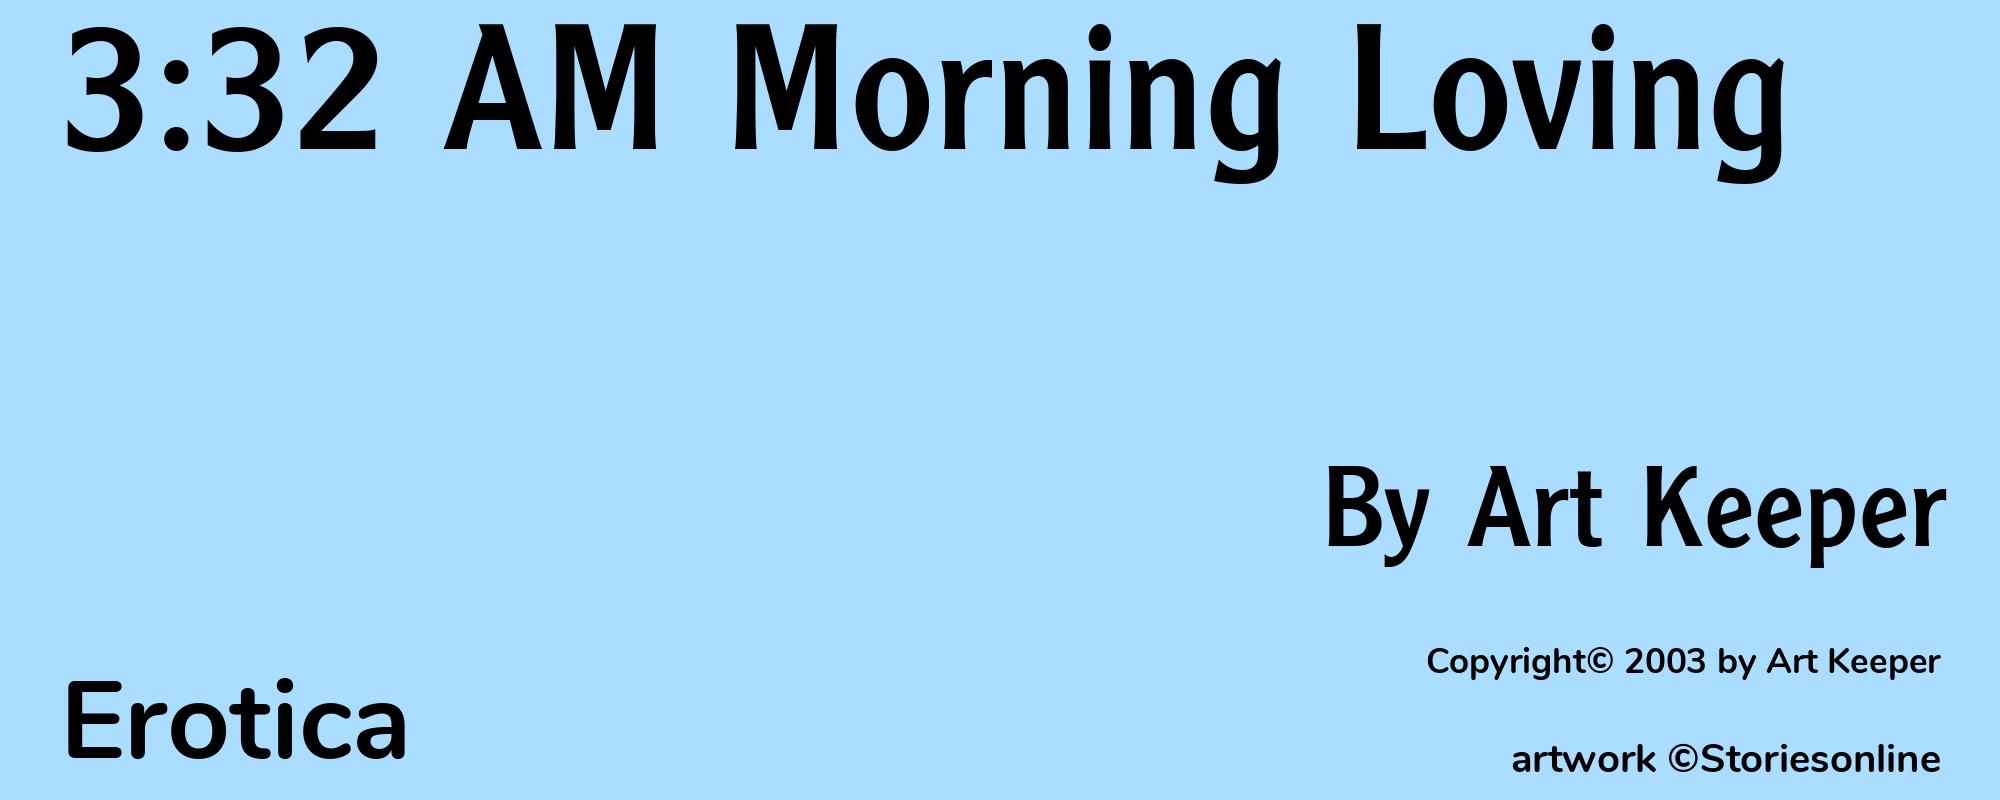 3:32 AM Morning Loving - Cover